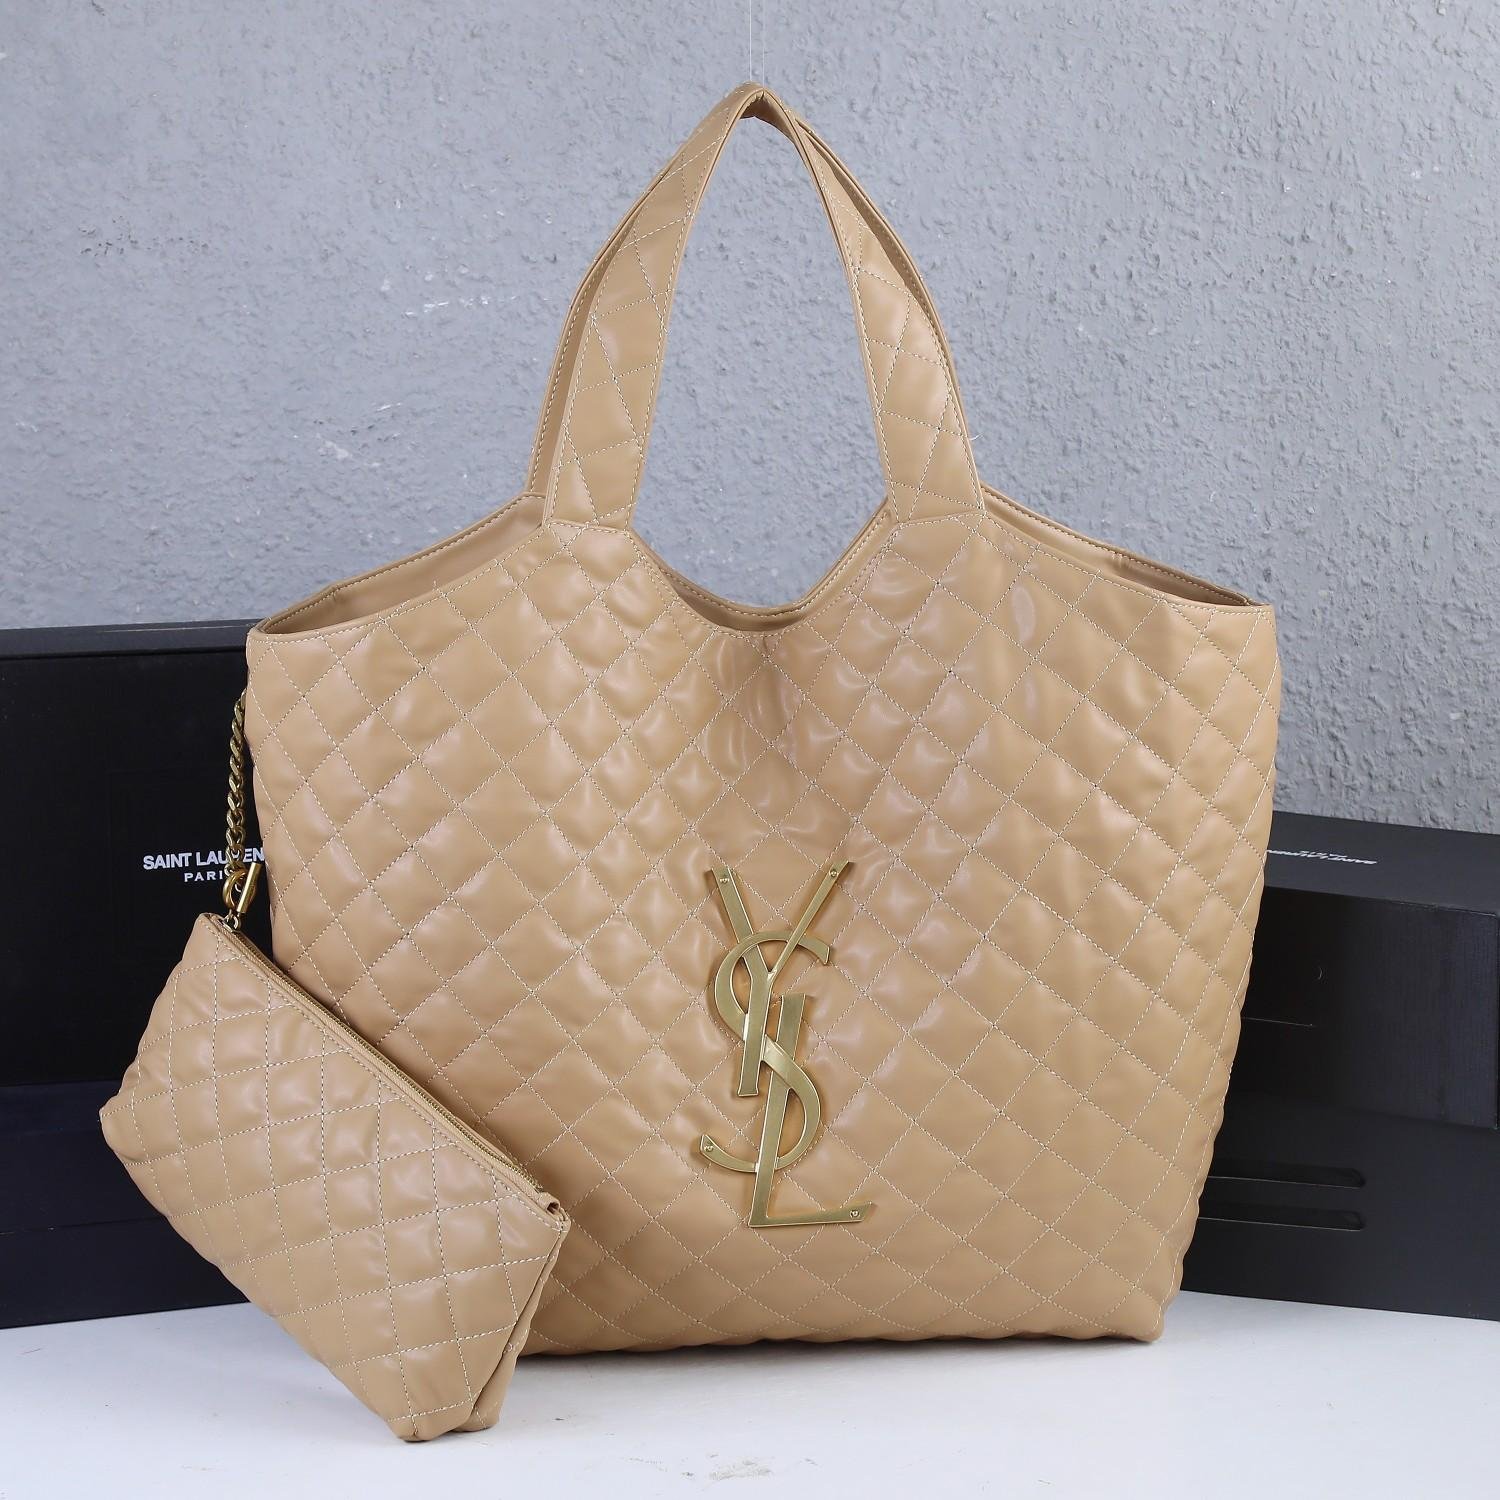     Icare Maxi Shopping Bag Lambskin  Large Capacity tote shoulder Bag purse 4